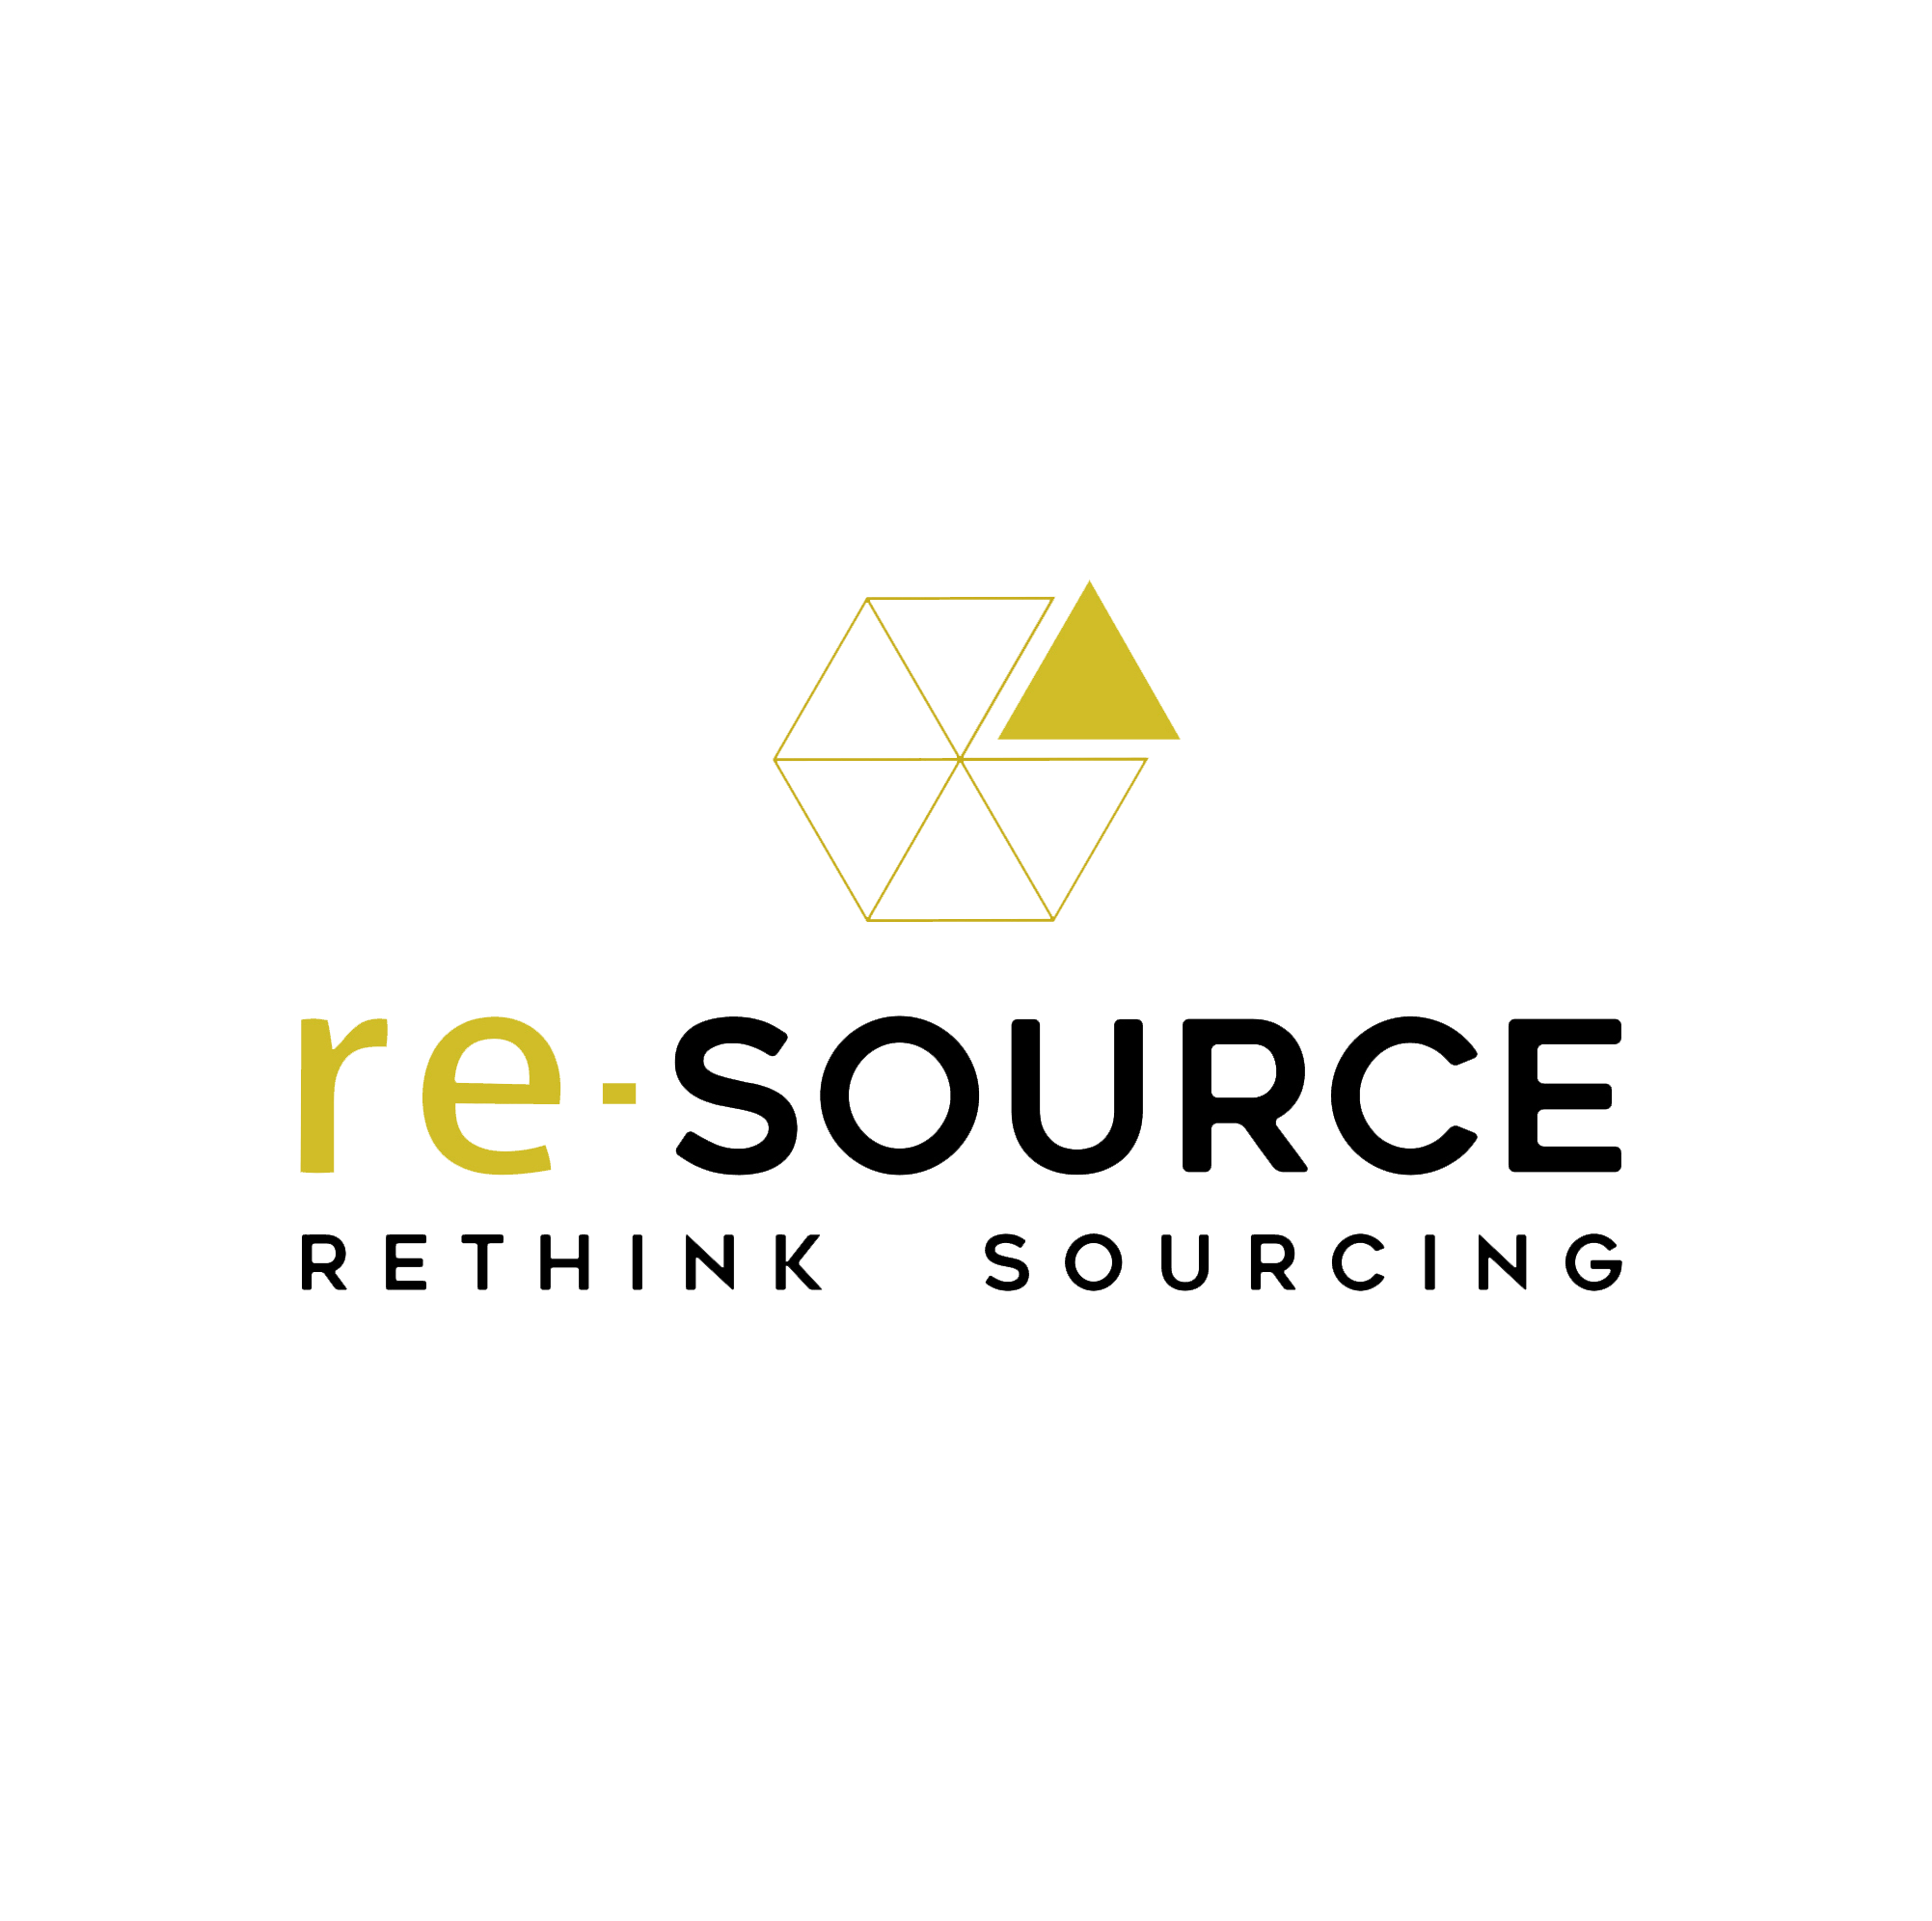 Re:sources компания. Логотип смола. Blackmagic Design Pte Ltd.